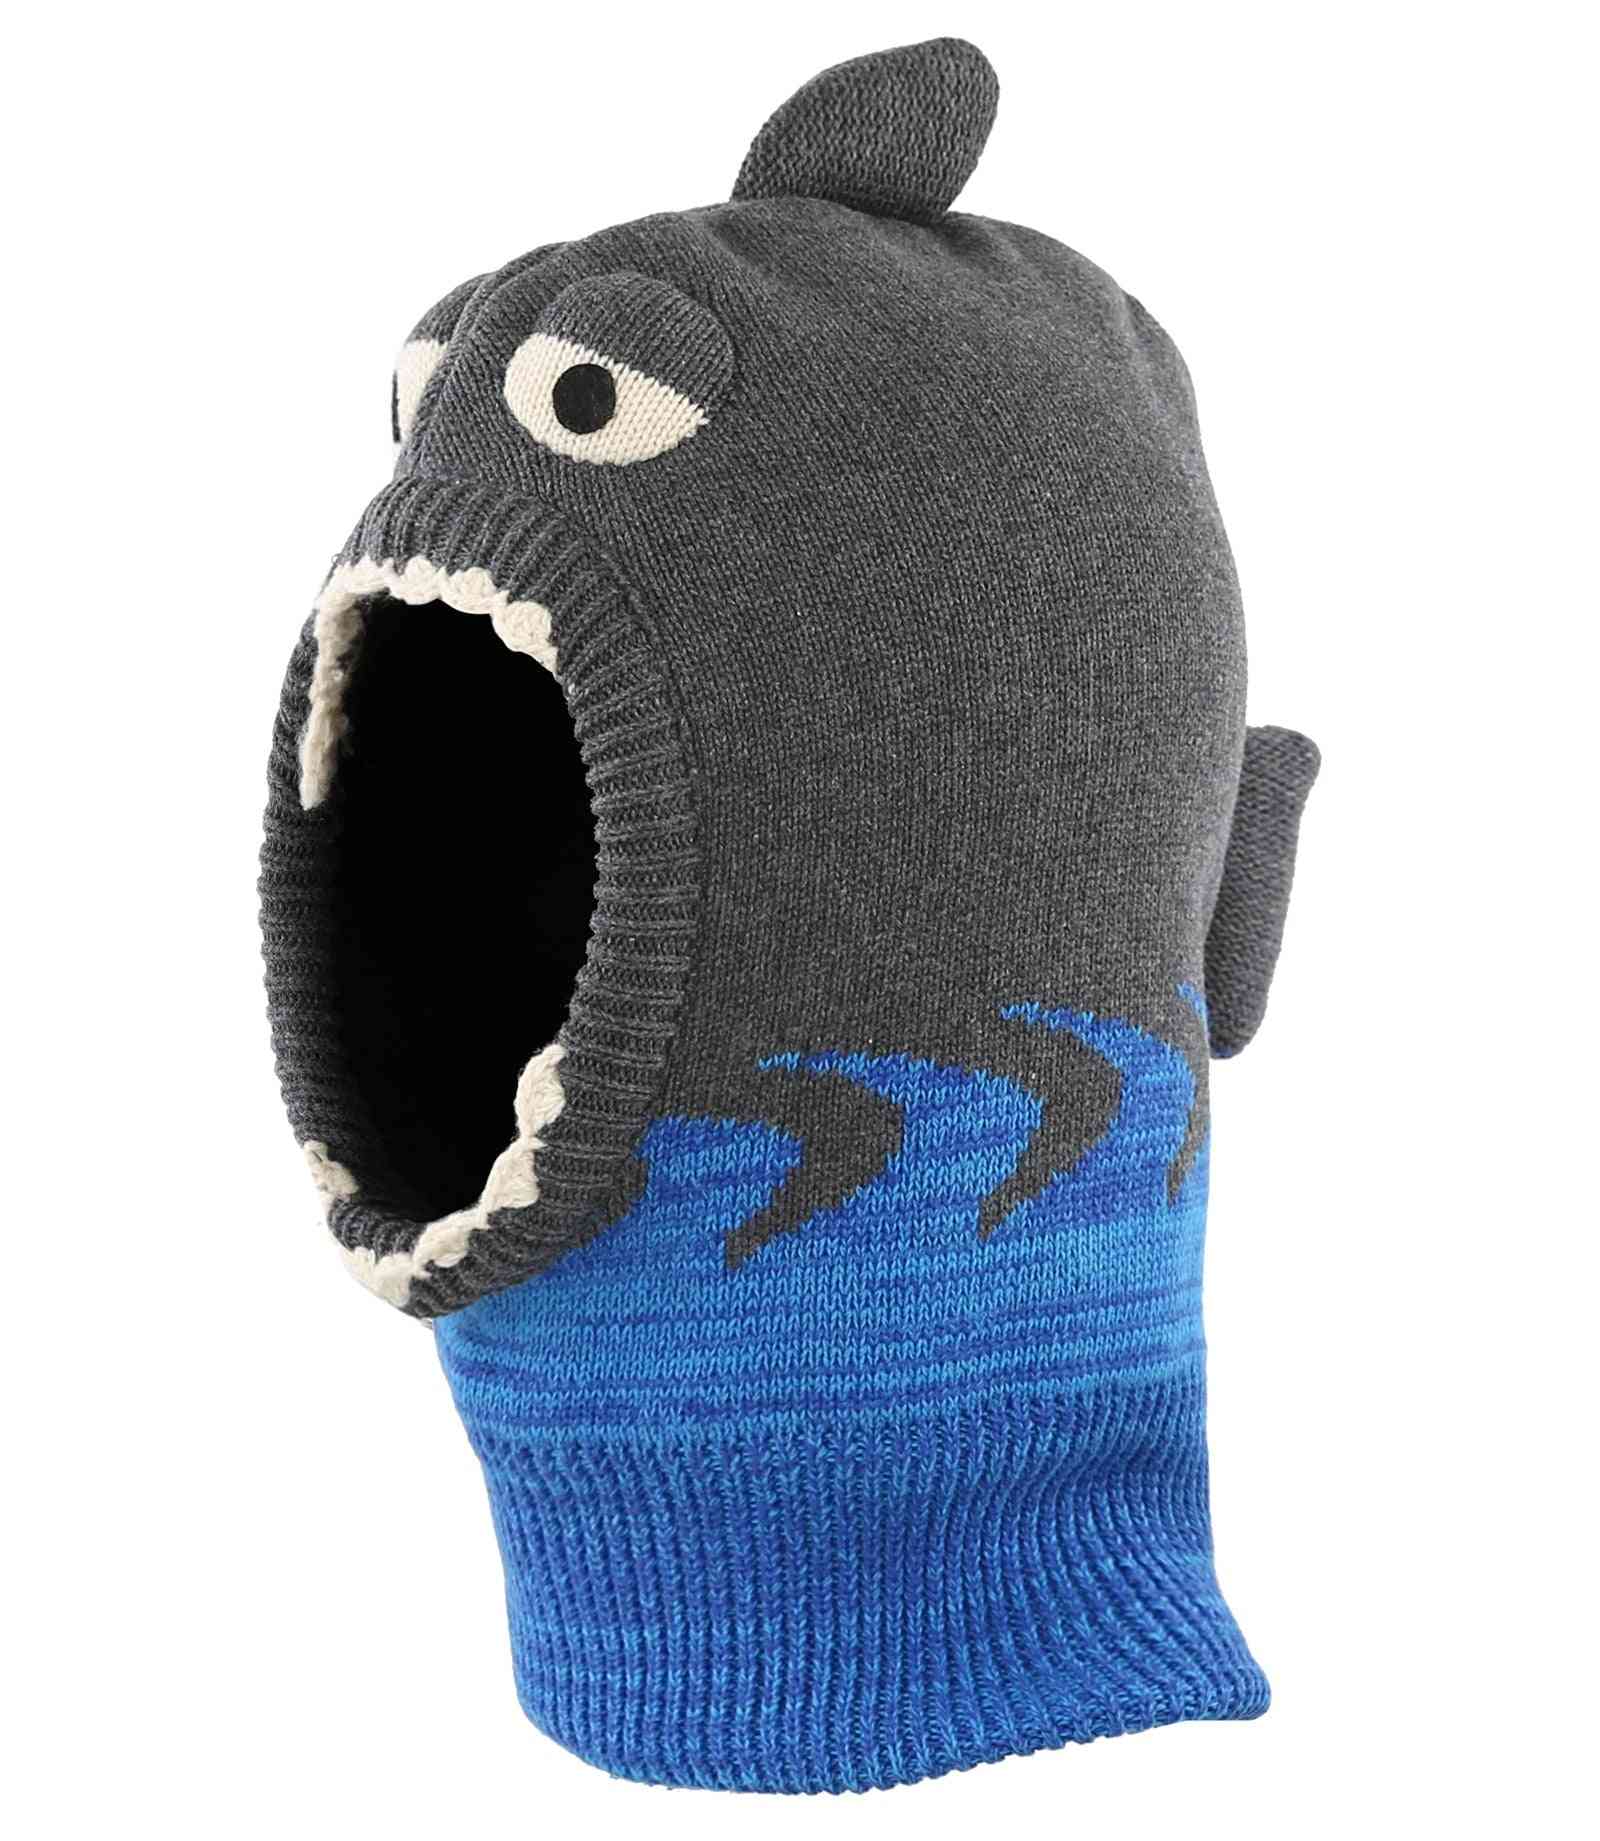 Toddler Infant Knit Winter Warm Hats, Cute Cartoon Shark Fleece Lined Hood Scarf